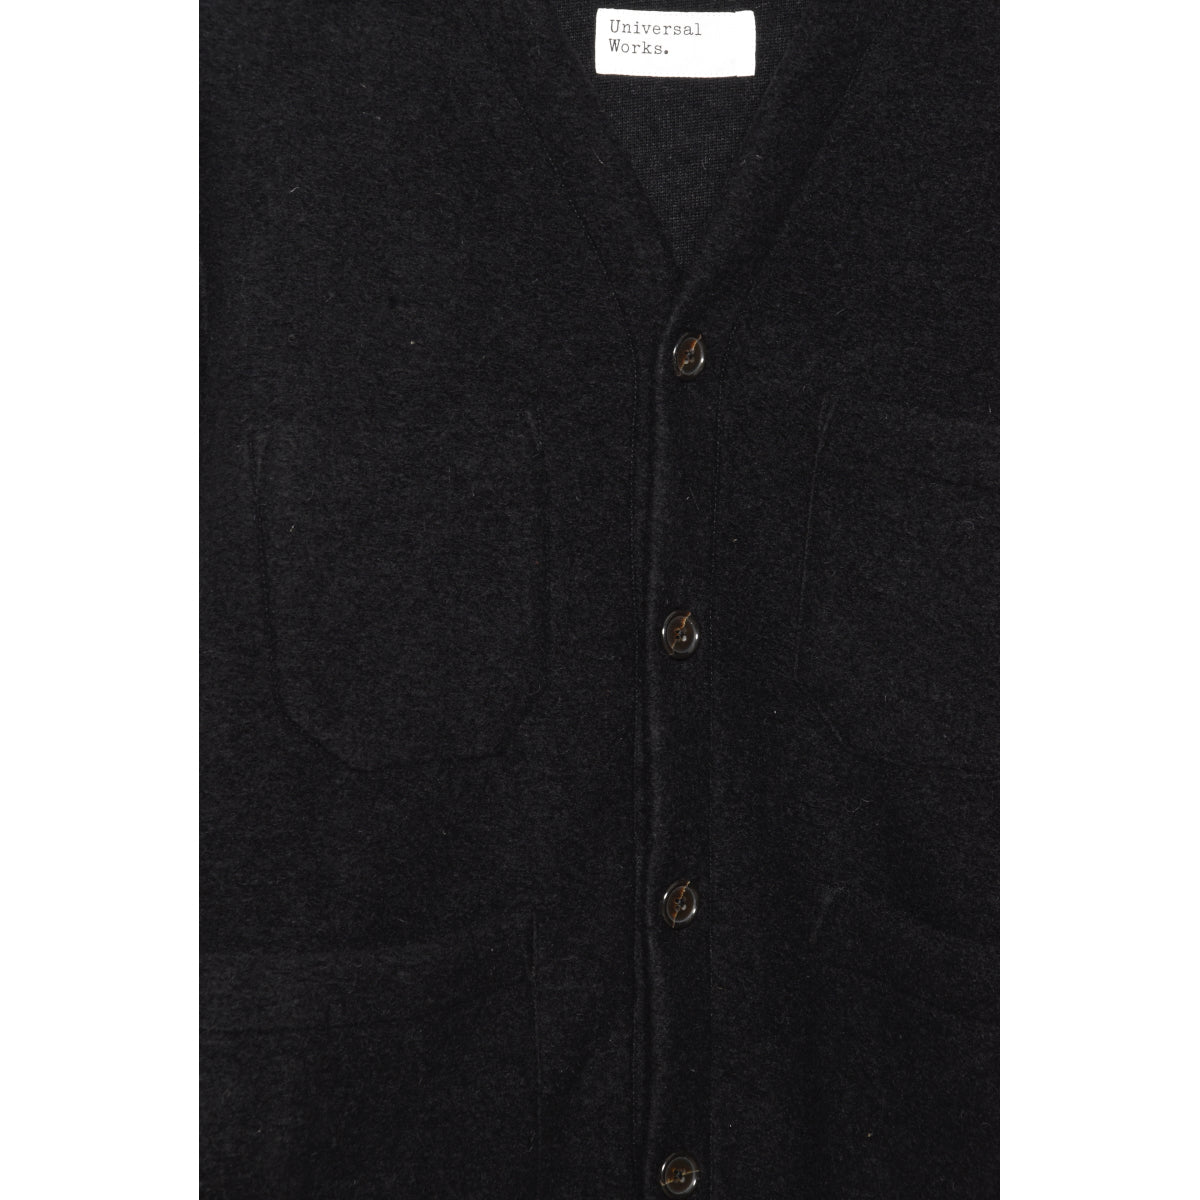 Universal Works Cardigan 29710 Wool Fleece black